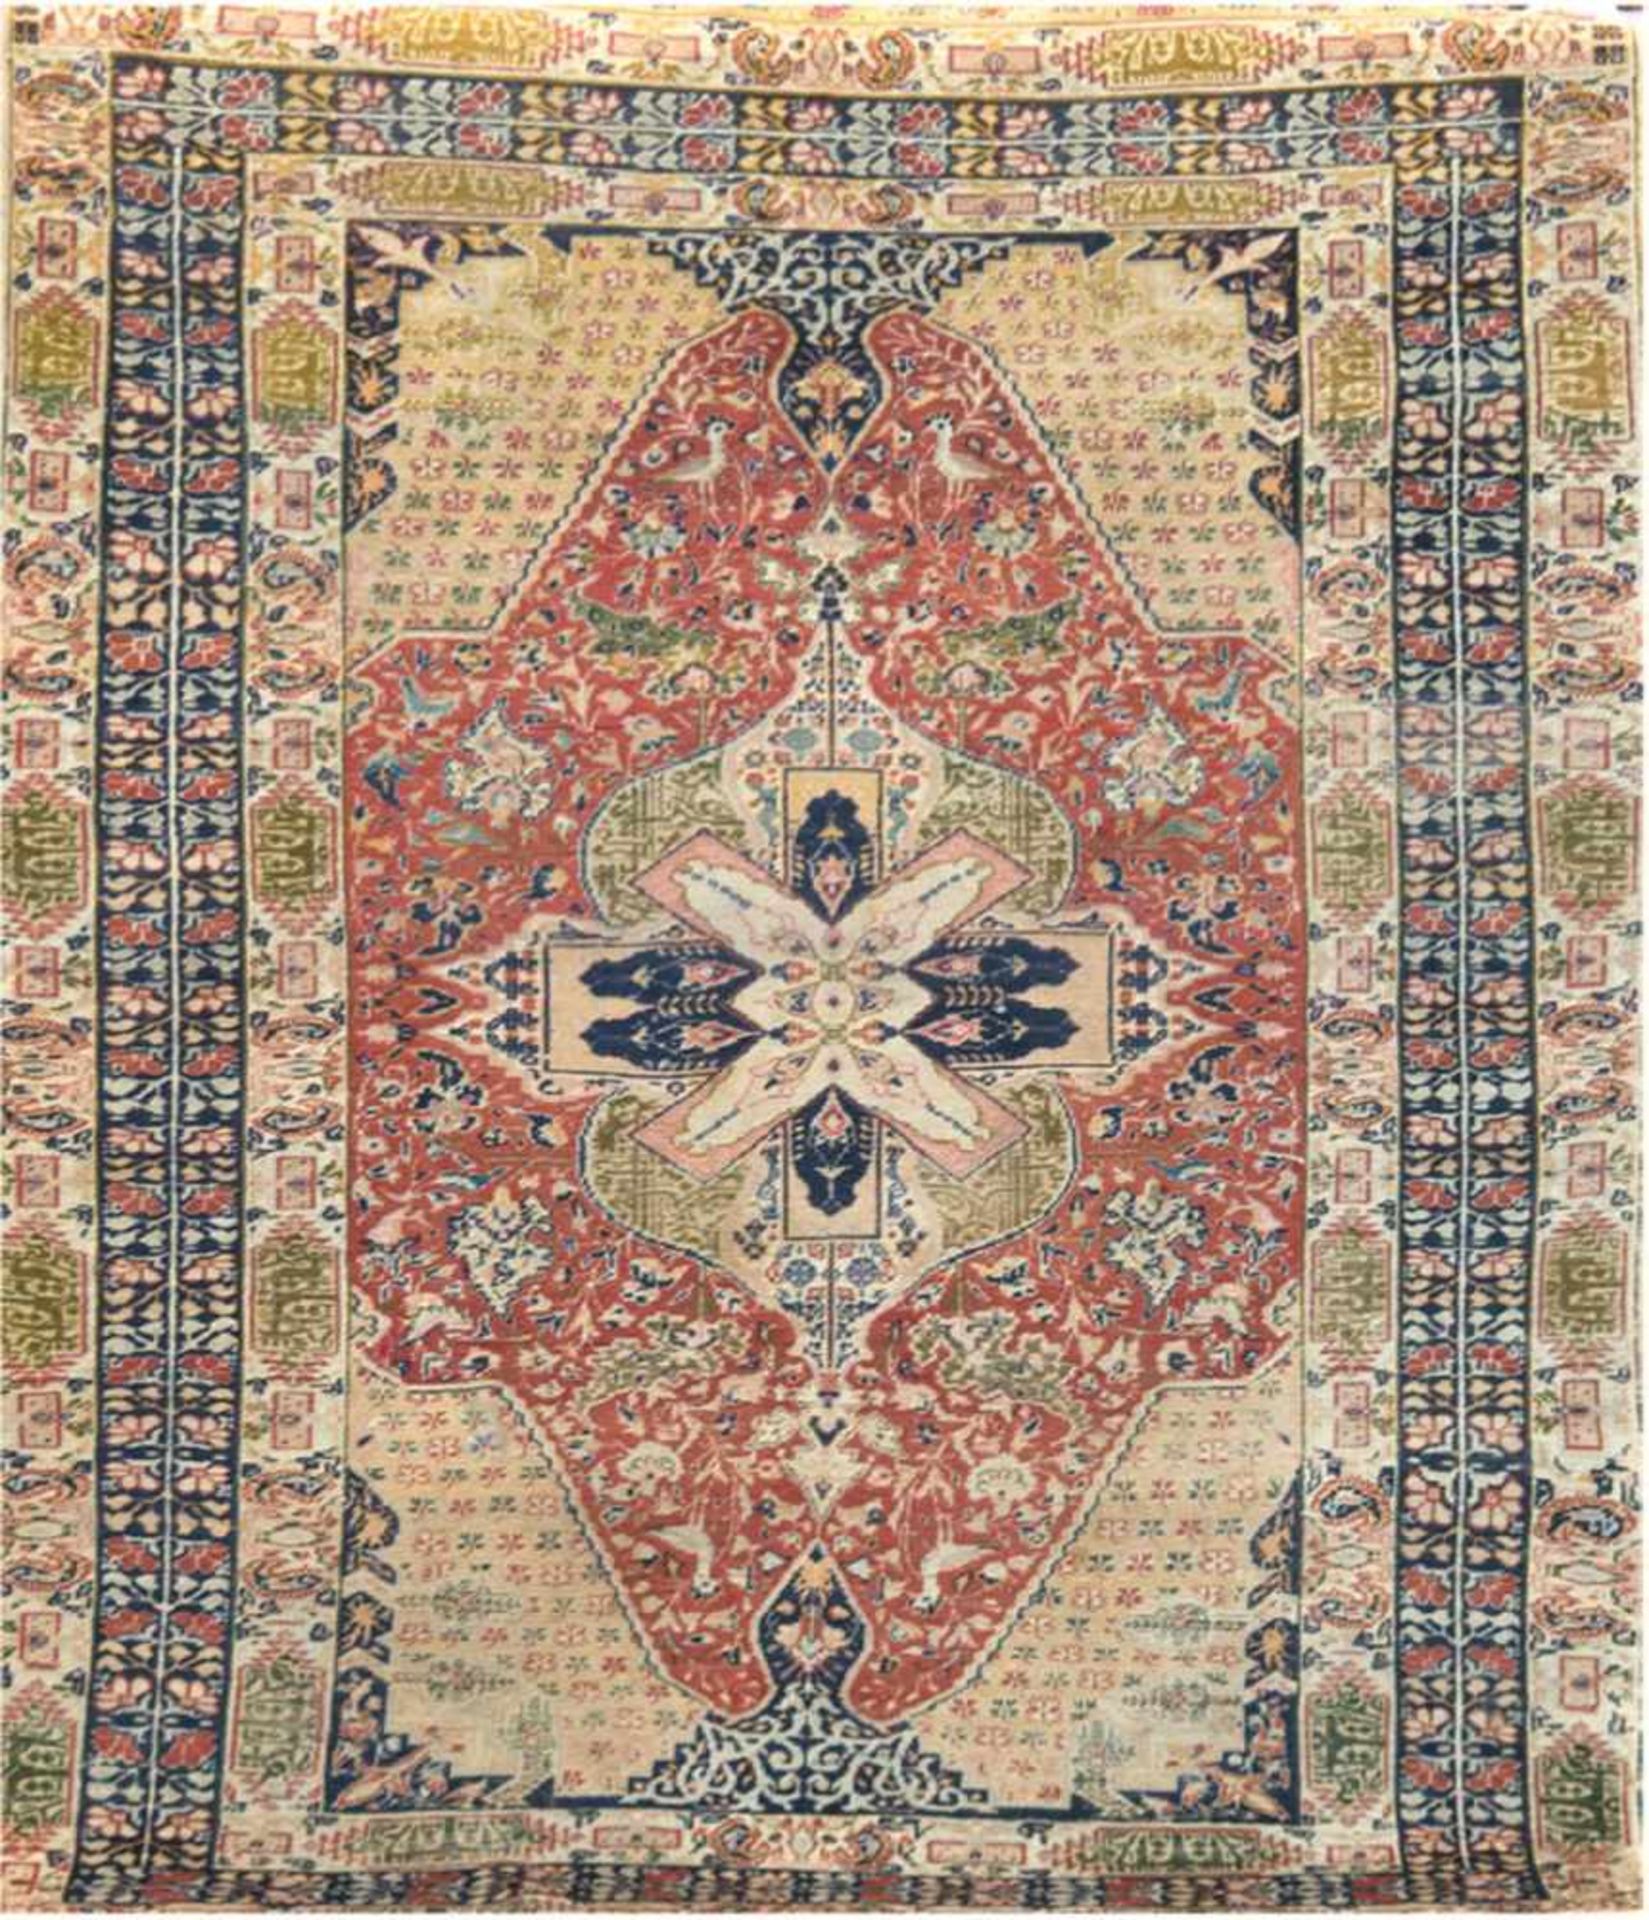 Teppich, Anatolien, rot/ blaugrundig, auf hellem Fond, mit zentralem Medaillon u. floralenMotiven,